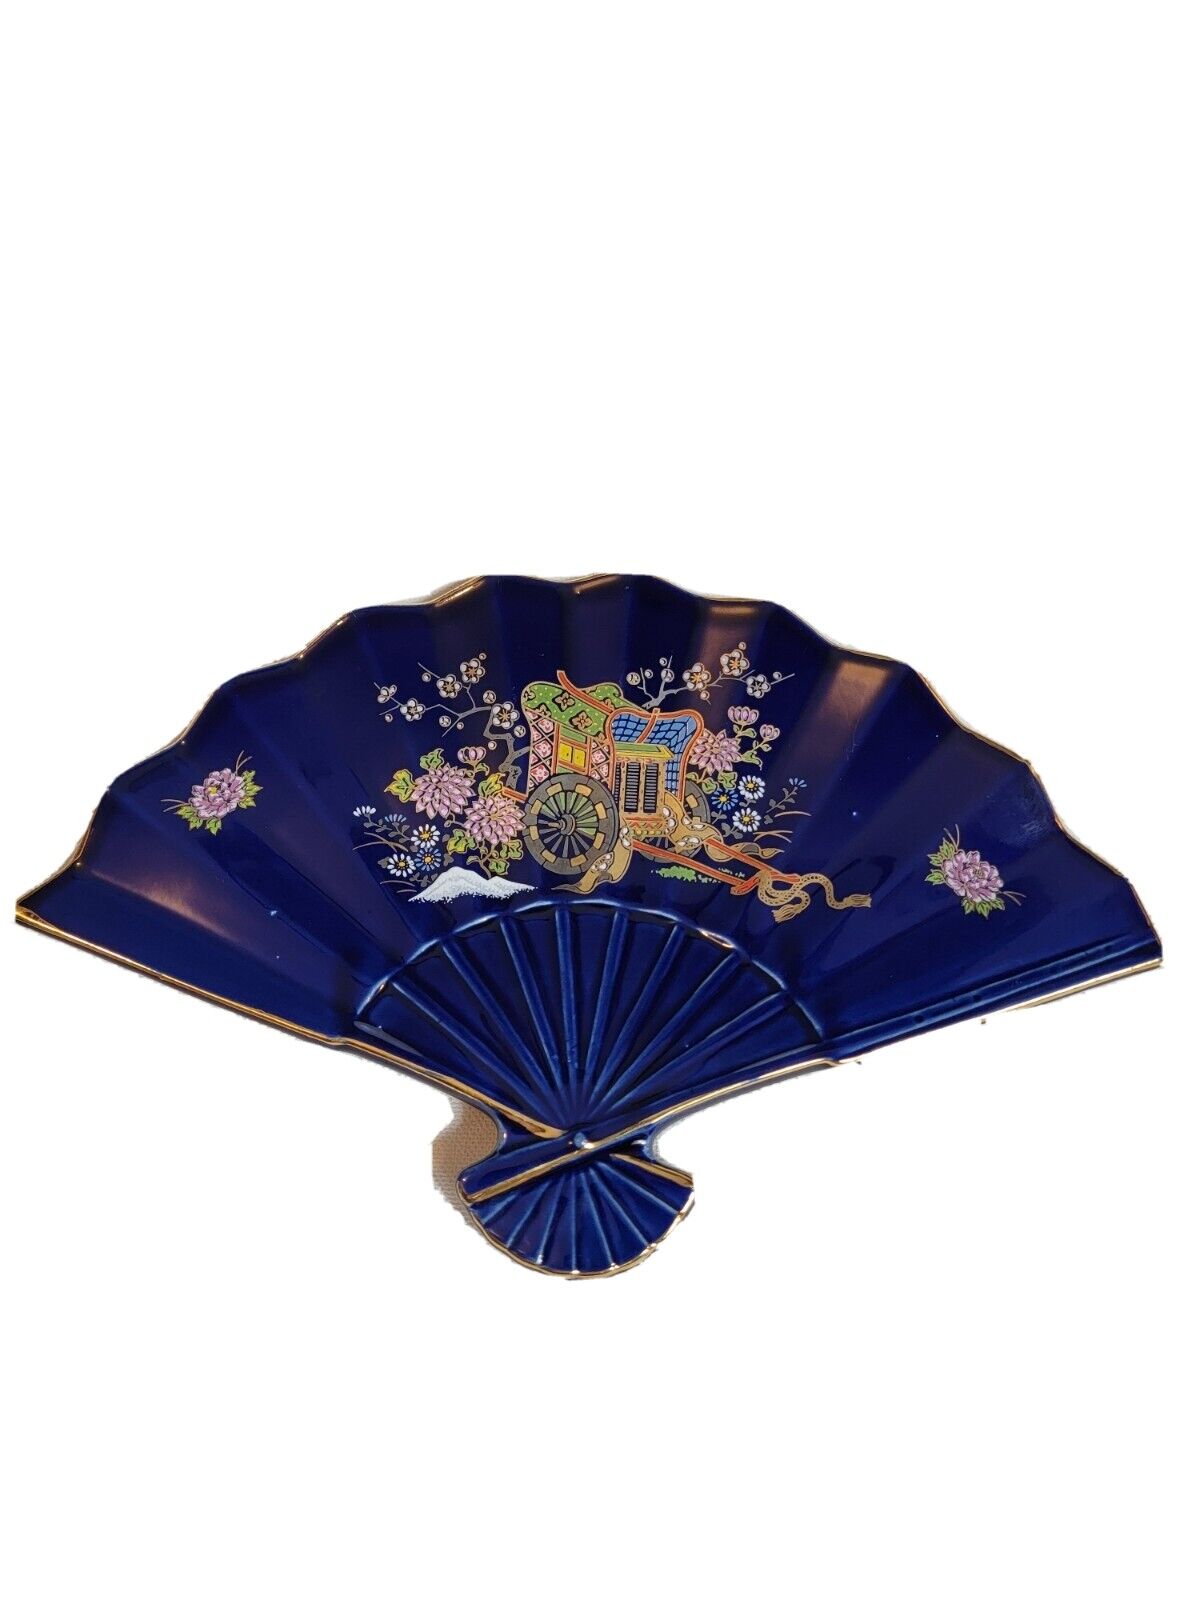 Vintage Cobalt Blue Japanese Fan Porcelain Dish Gold Trim Hand Painted VTG Decor